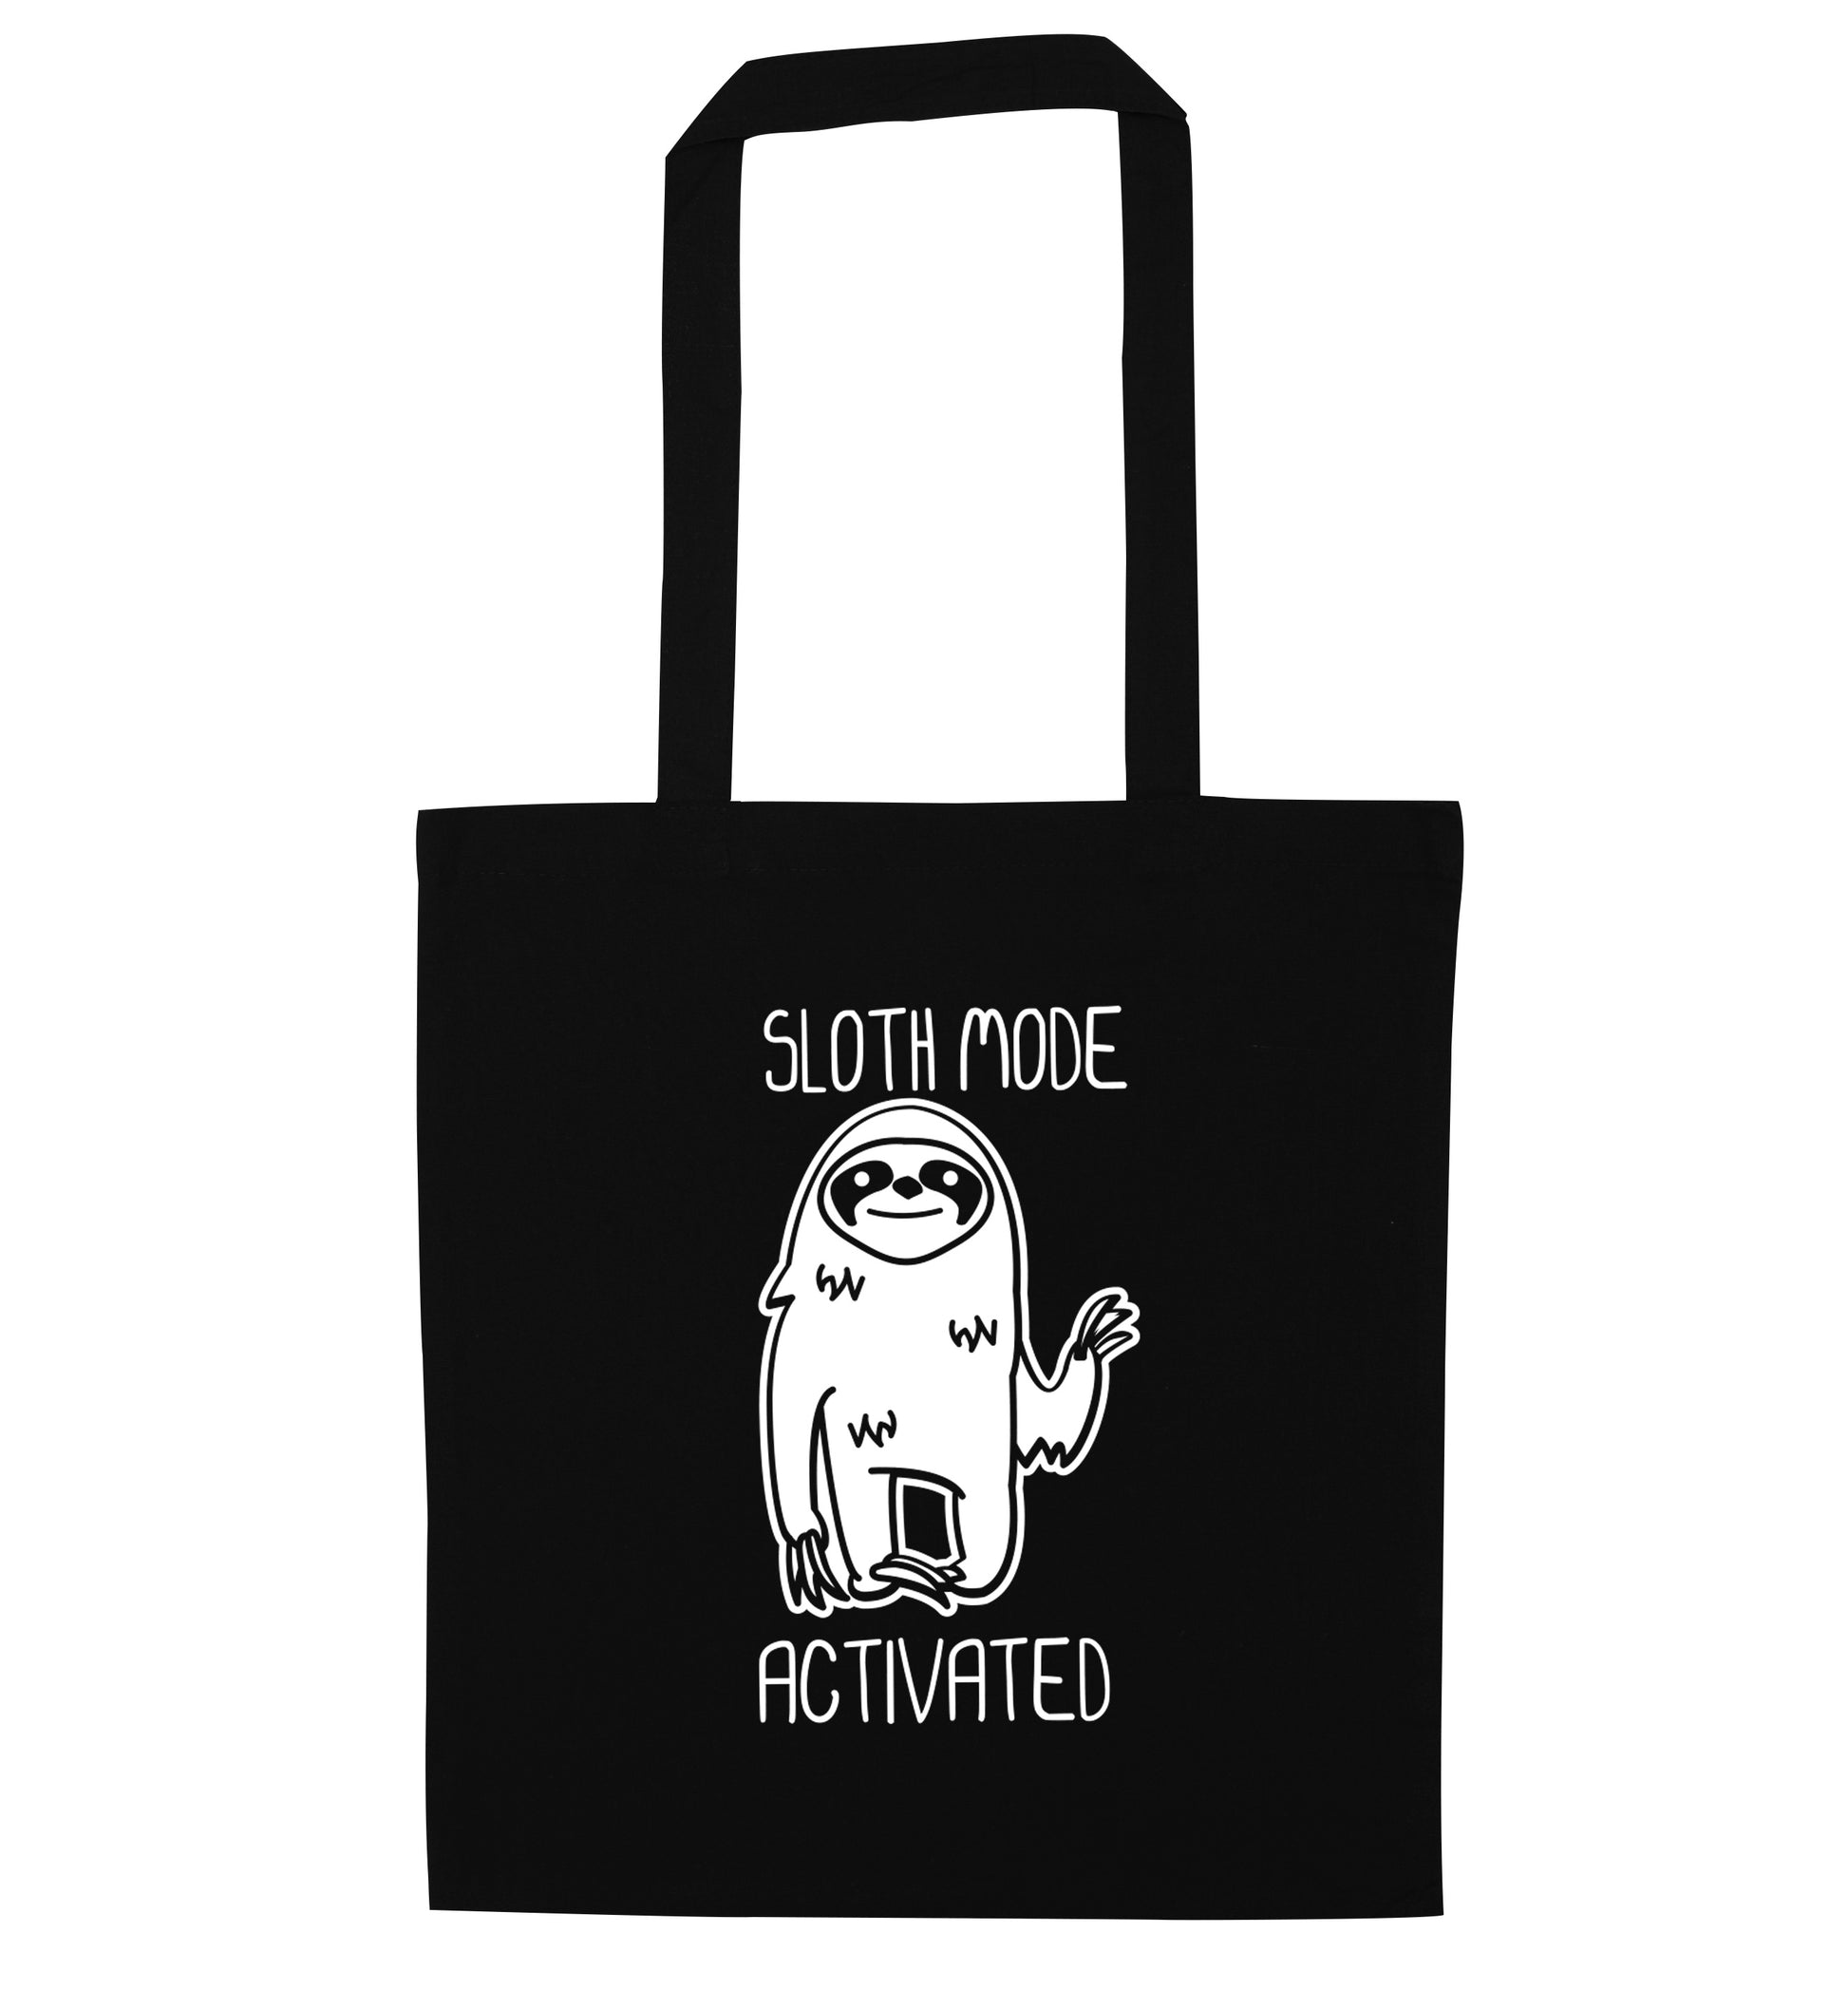 Sloth mode acitvated black tote bag